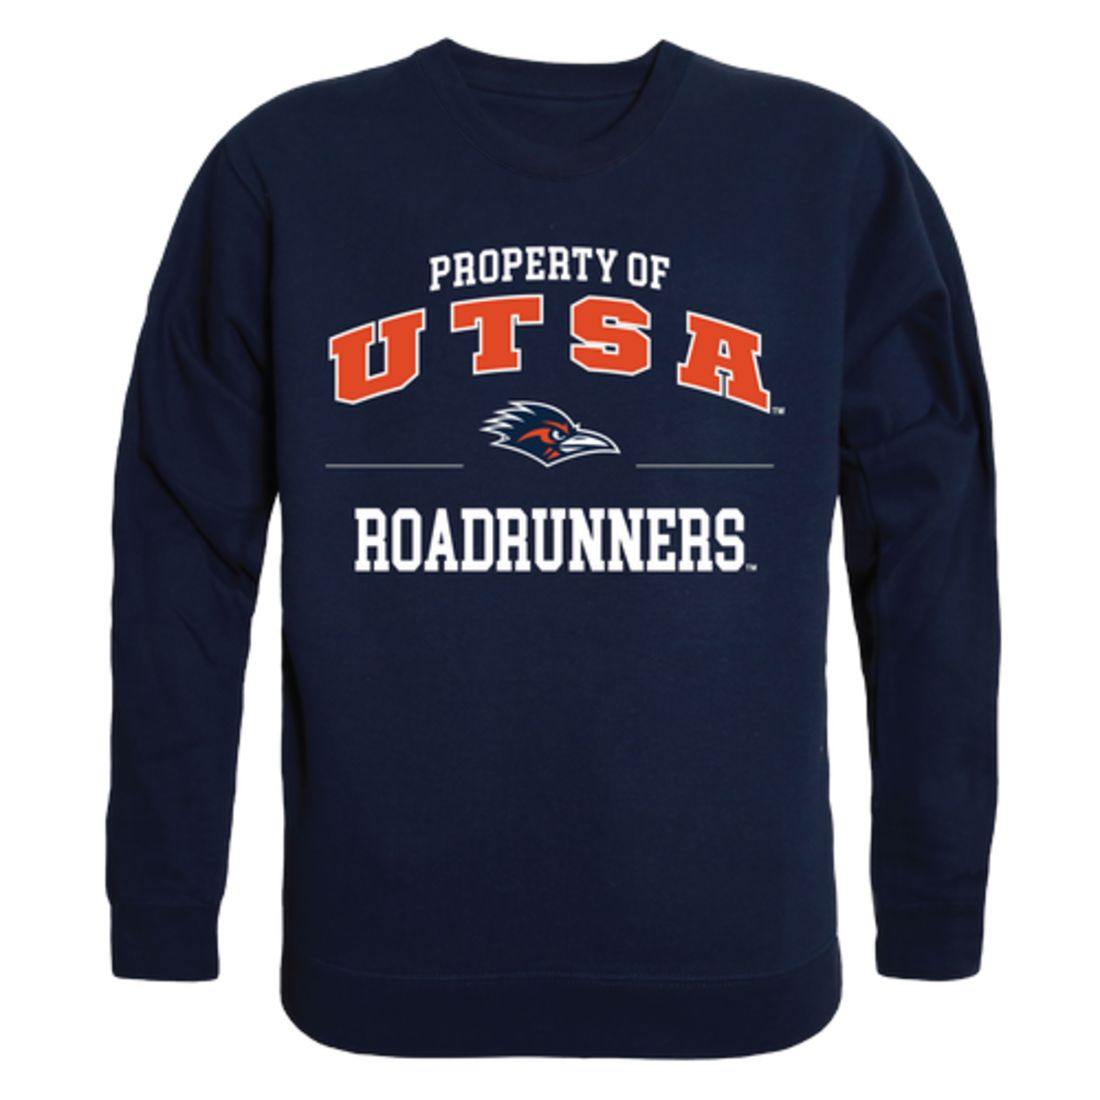 UTSA University of Texas at San Antonio Roadrunners Property Crewneck Pullover Sweatshirt Sweater Navy-Campus-Wardrobe